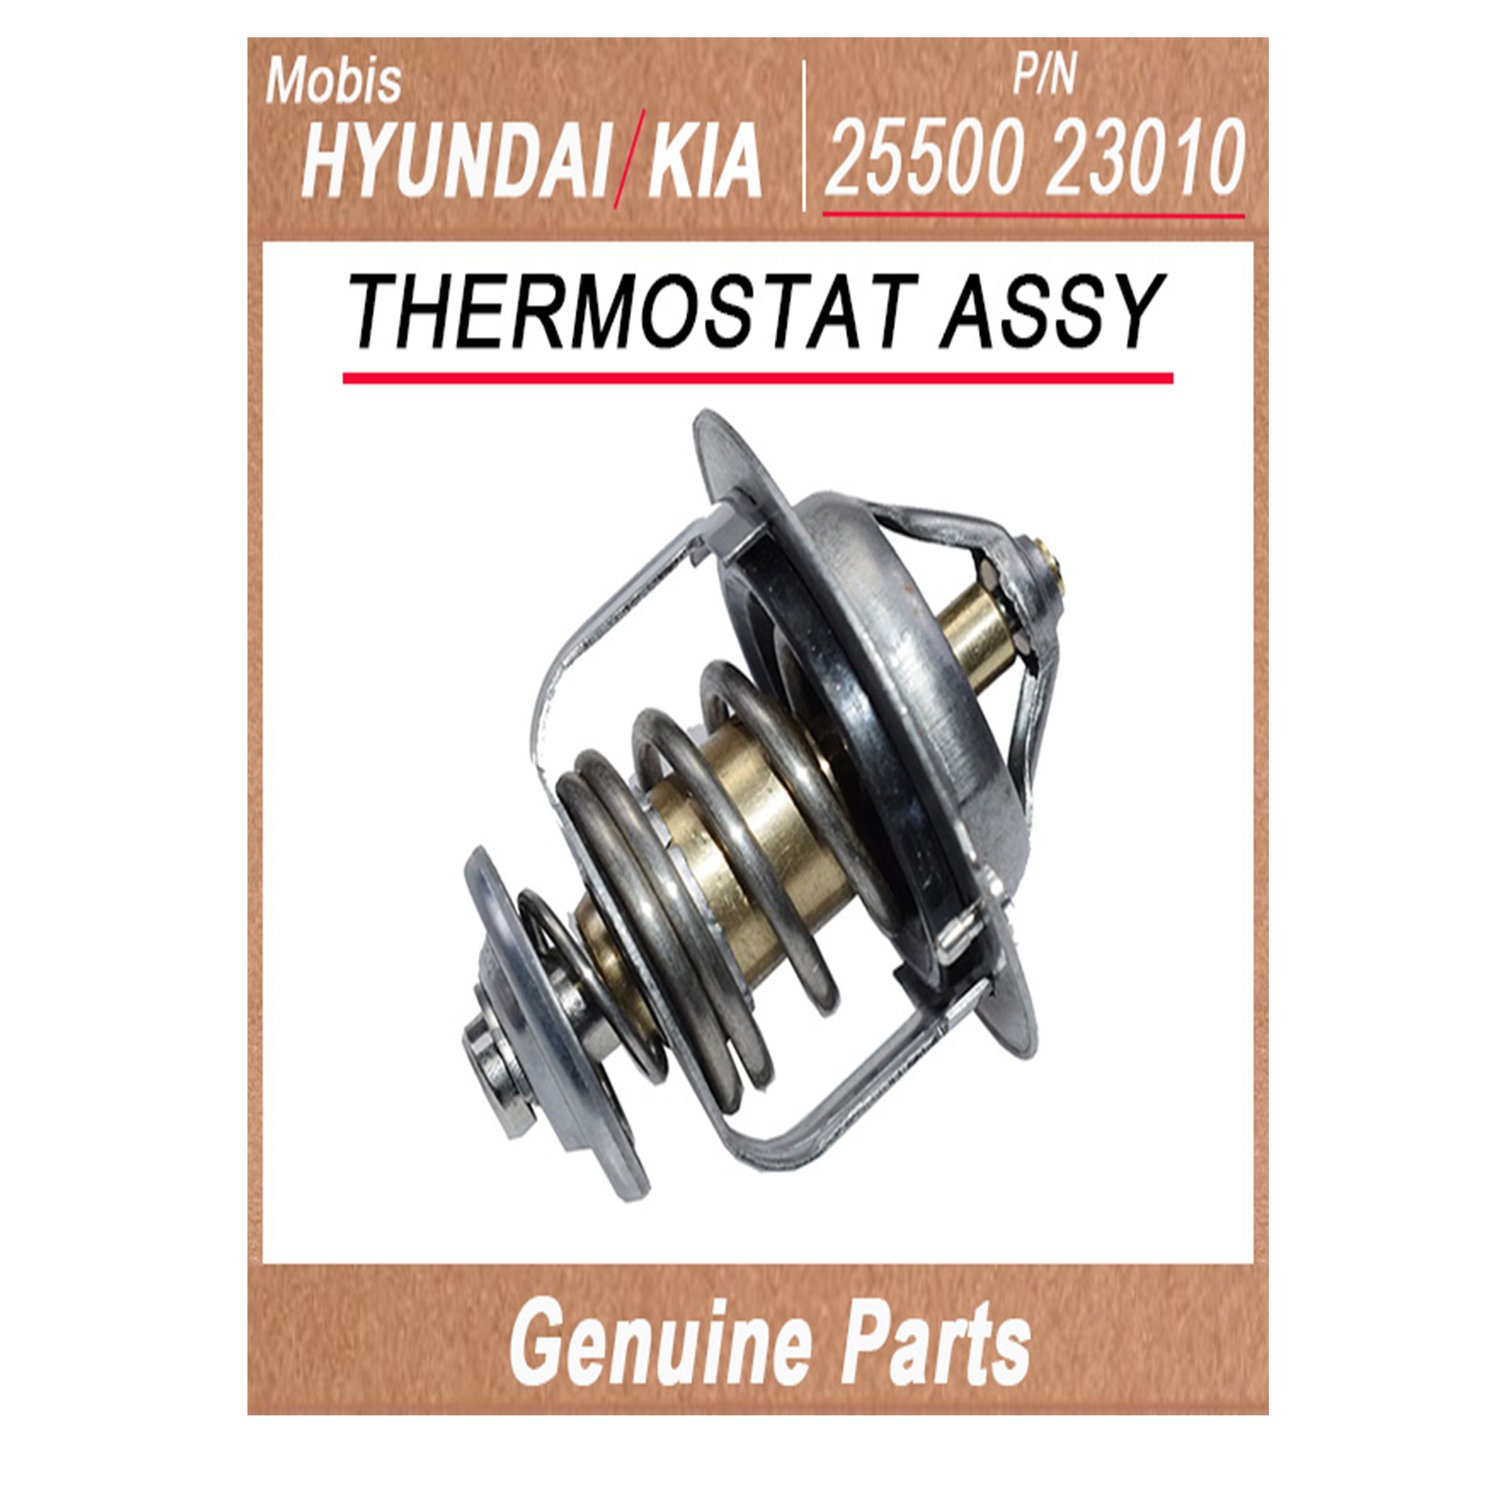 2550023010 _ THERMOSTAT ASSY _ Genuine Korean Automotive Spare Parts _ Hyundai Kia _Mobis_